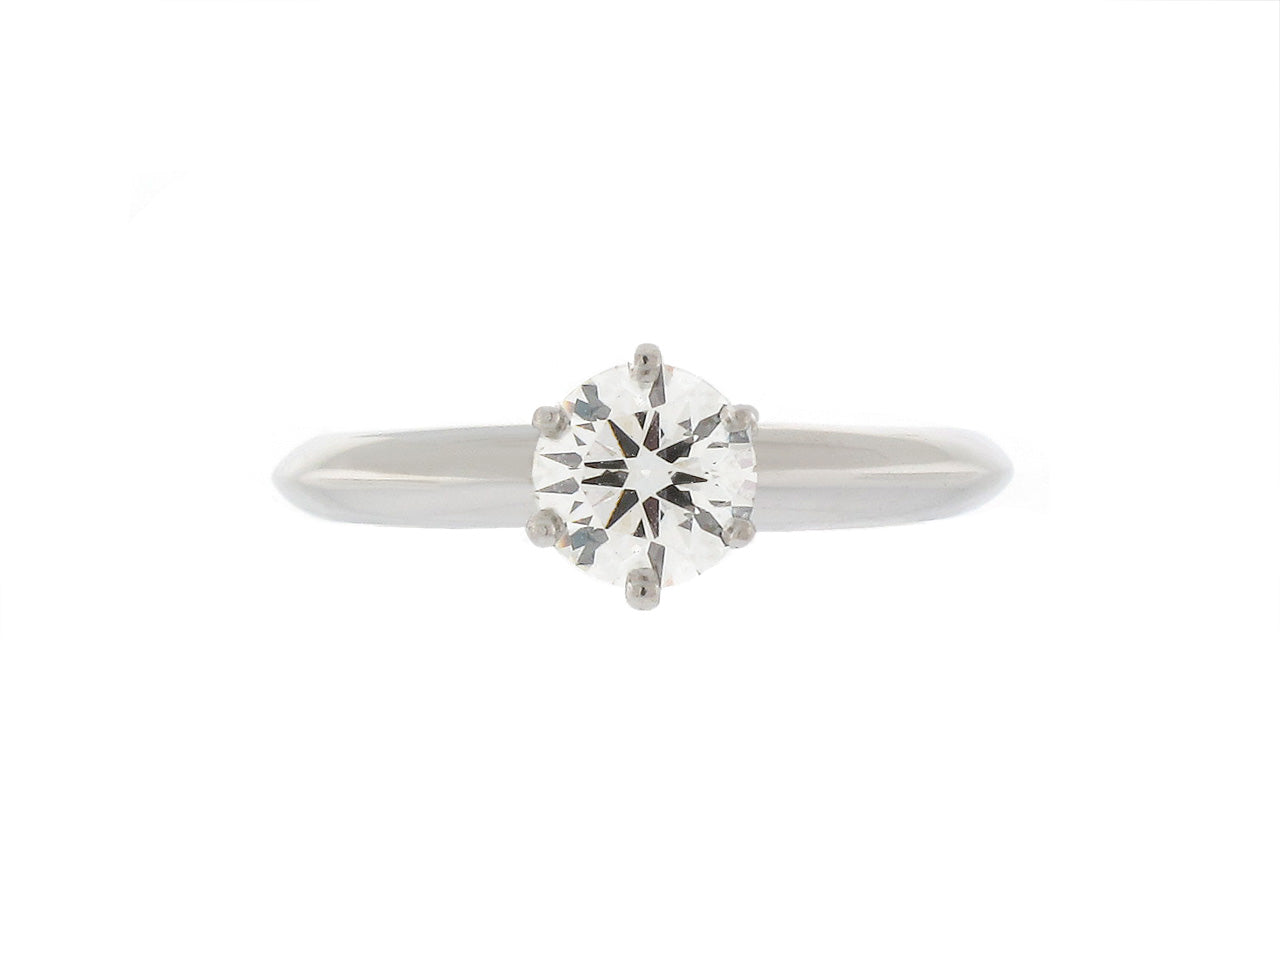 Tiffany & Co. 'Tiffany Setting' Diamond Solitaire Ring, 0.63 Carat I/VS1, in Platinum